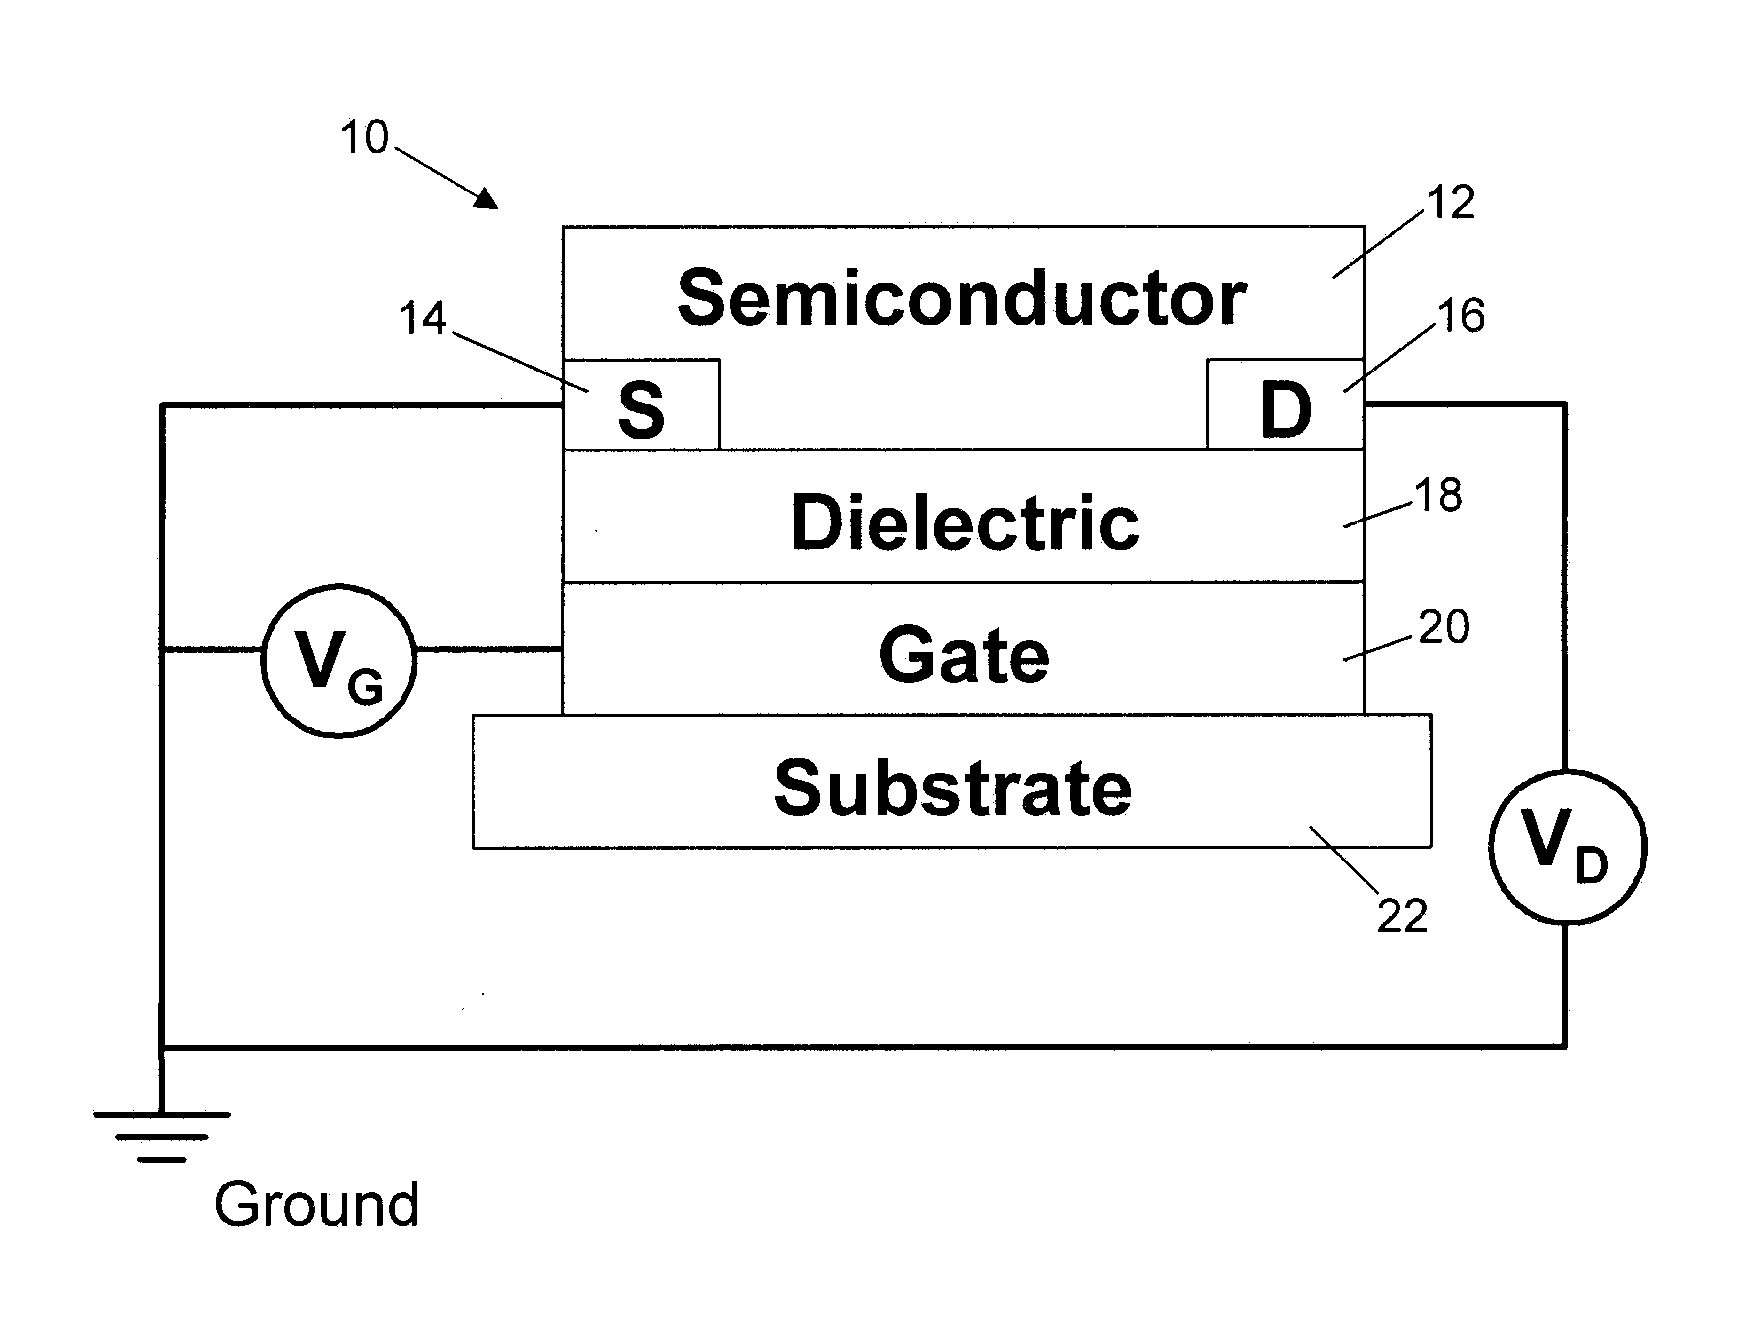 Fabrication method for thin-film field-effect transistors